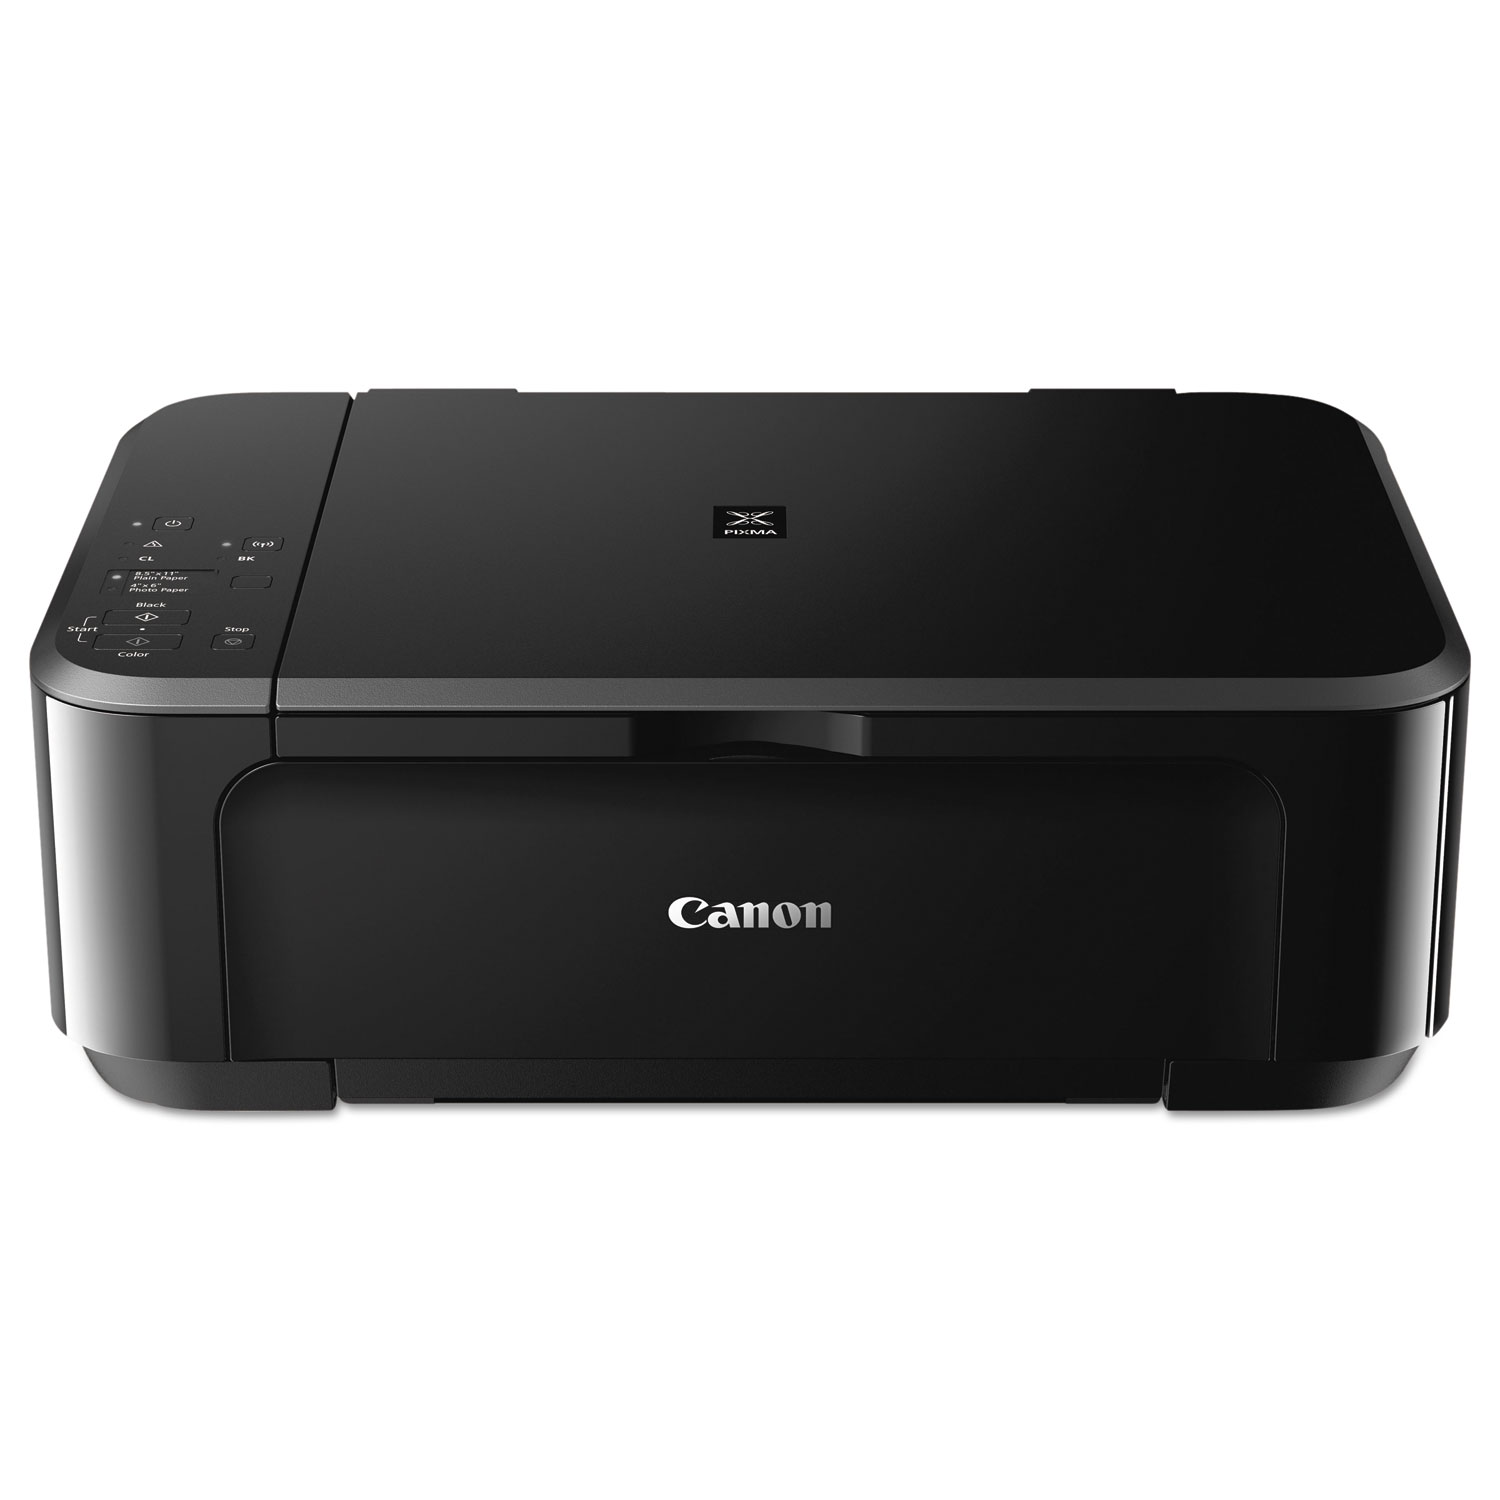  Canon 0515C002 PIXMA MG3620 Wireless All-in-One Photo Inkjet Printer, Copy/Print/Scan (CNM0515C002) 